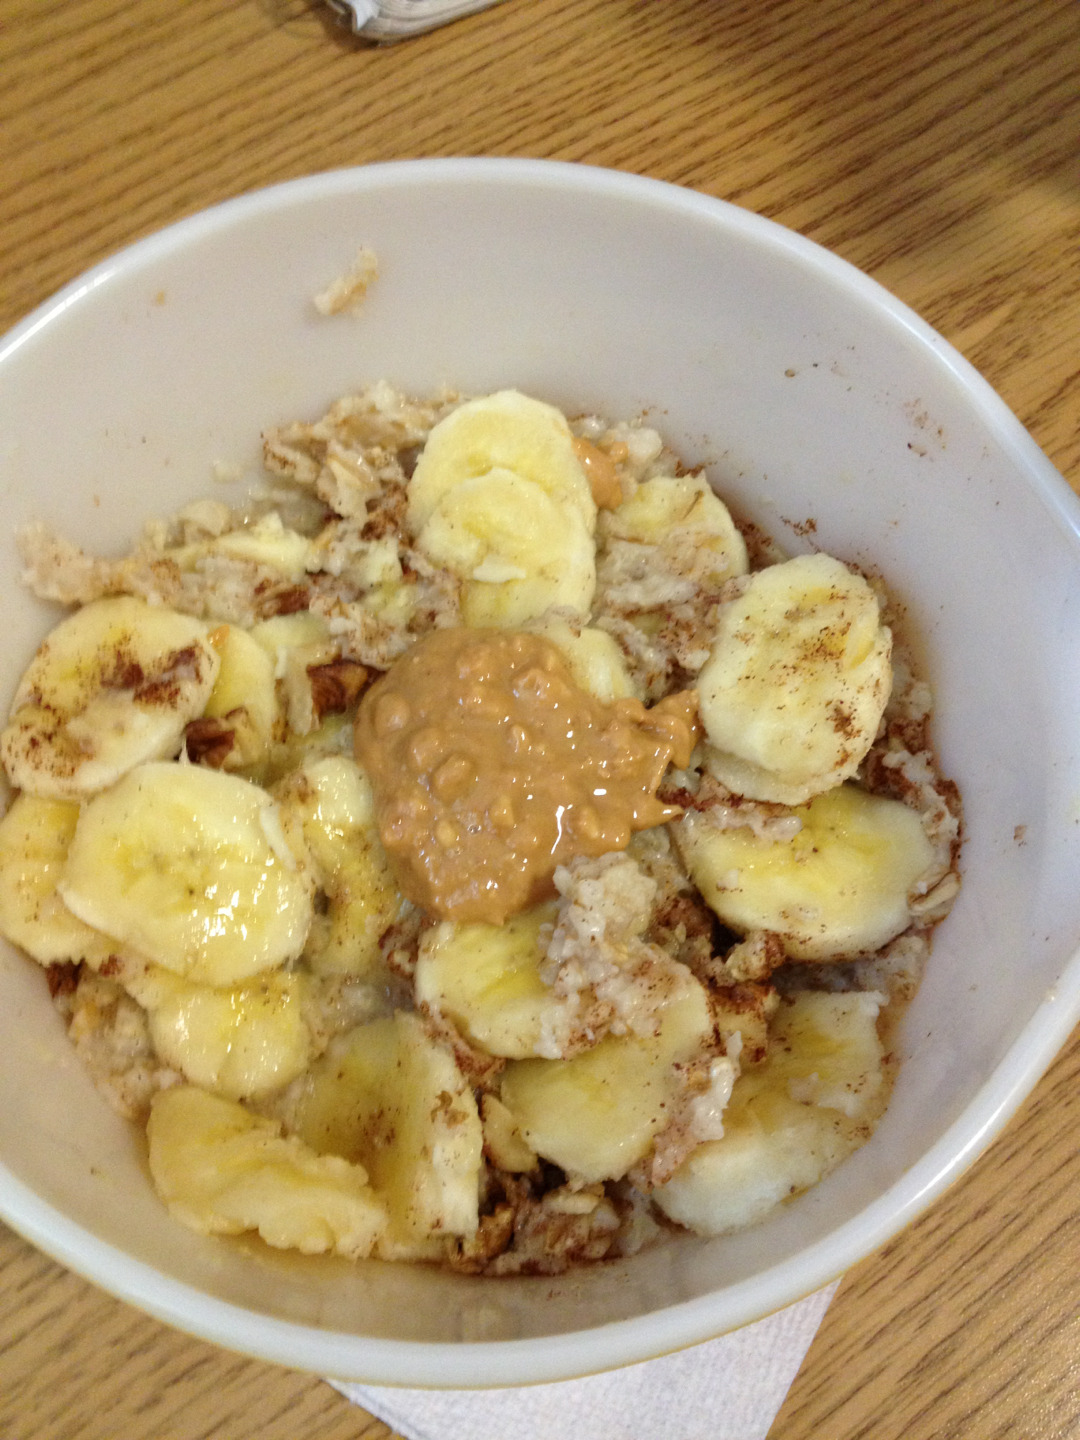 Old fashioned oats, banana, walnuts, cinnamon, &amp; a dollop of all natural crunchy pb